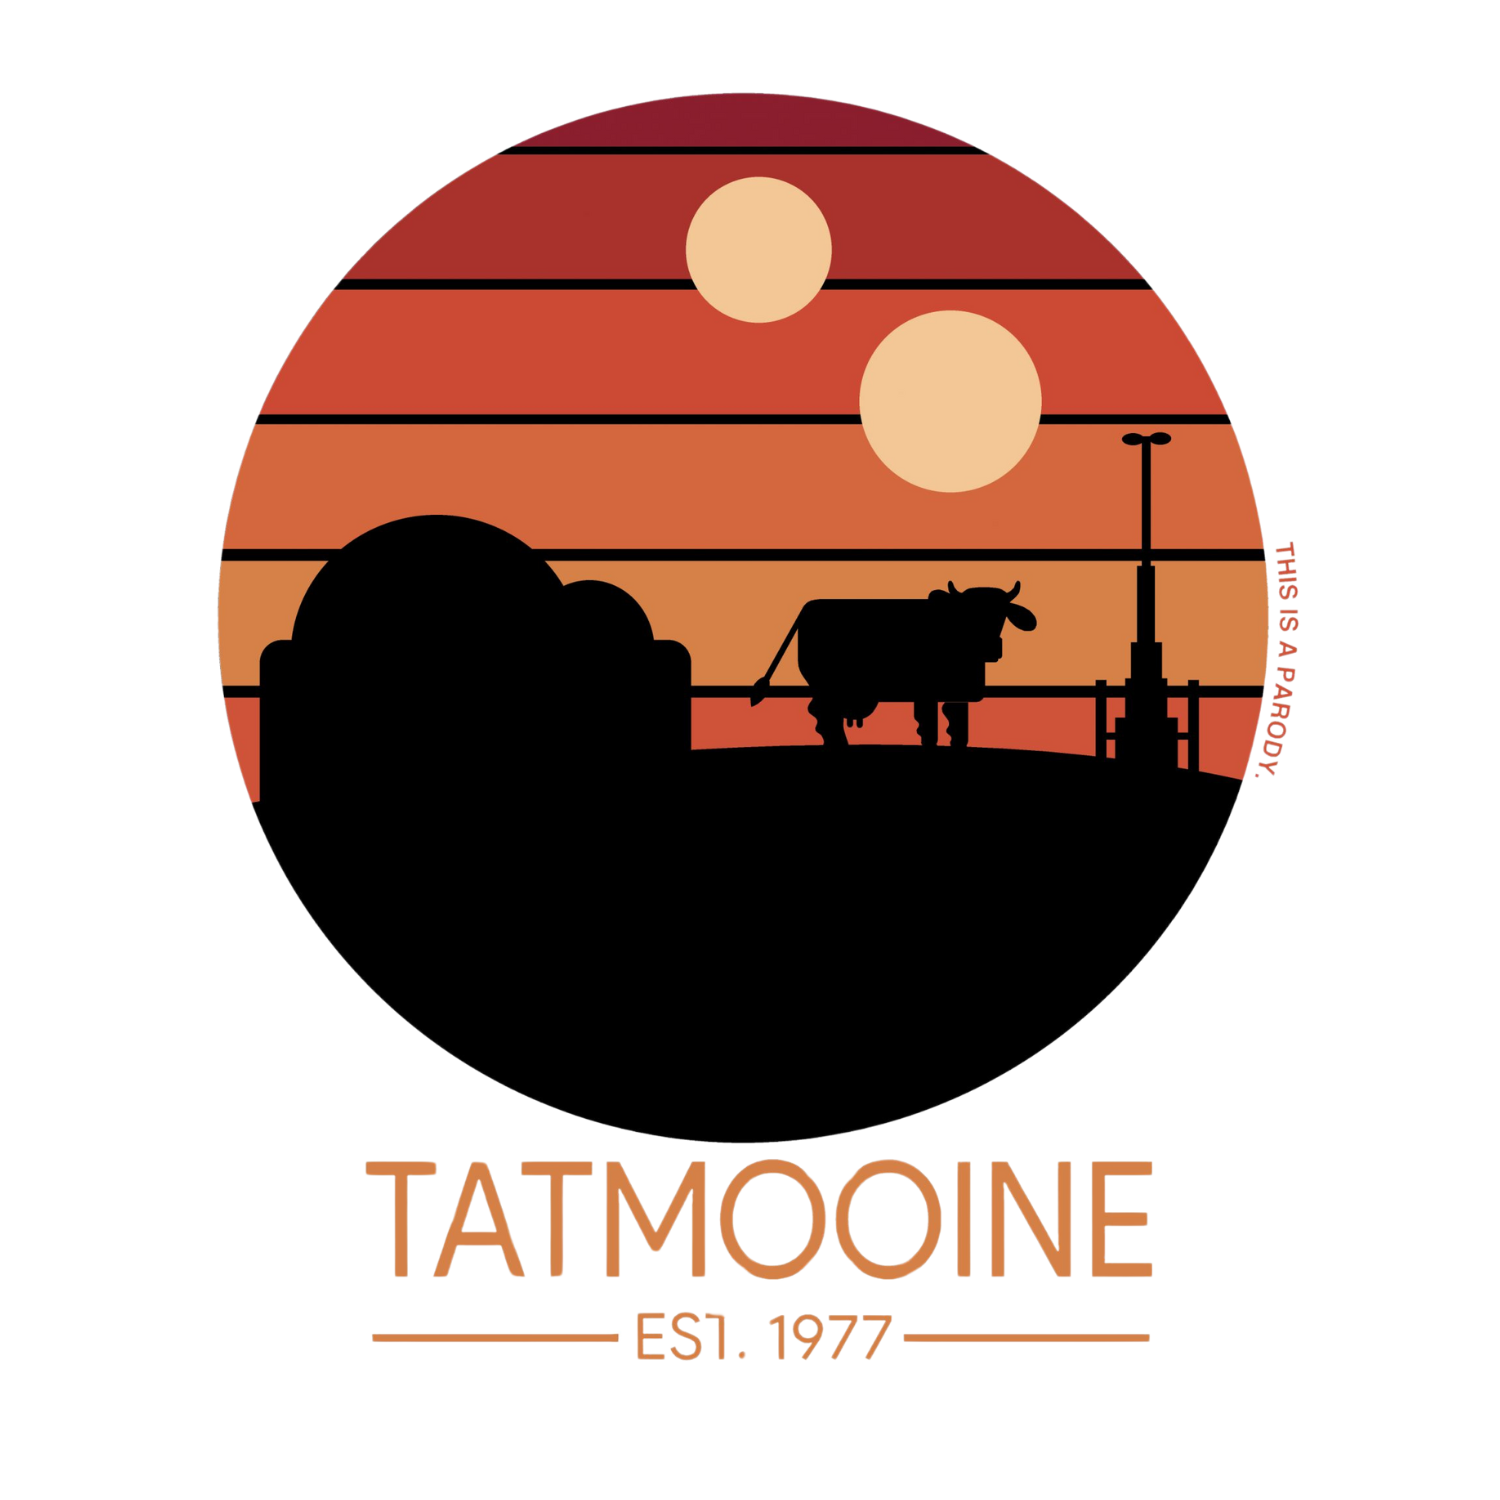 TatMOOine COWS Classic T